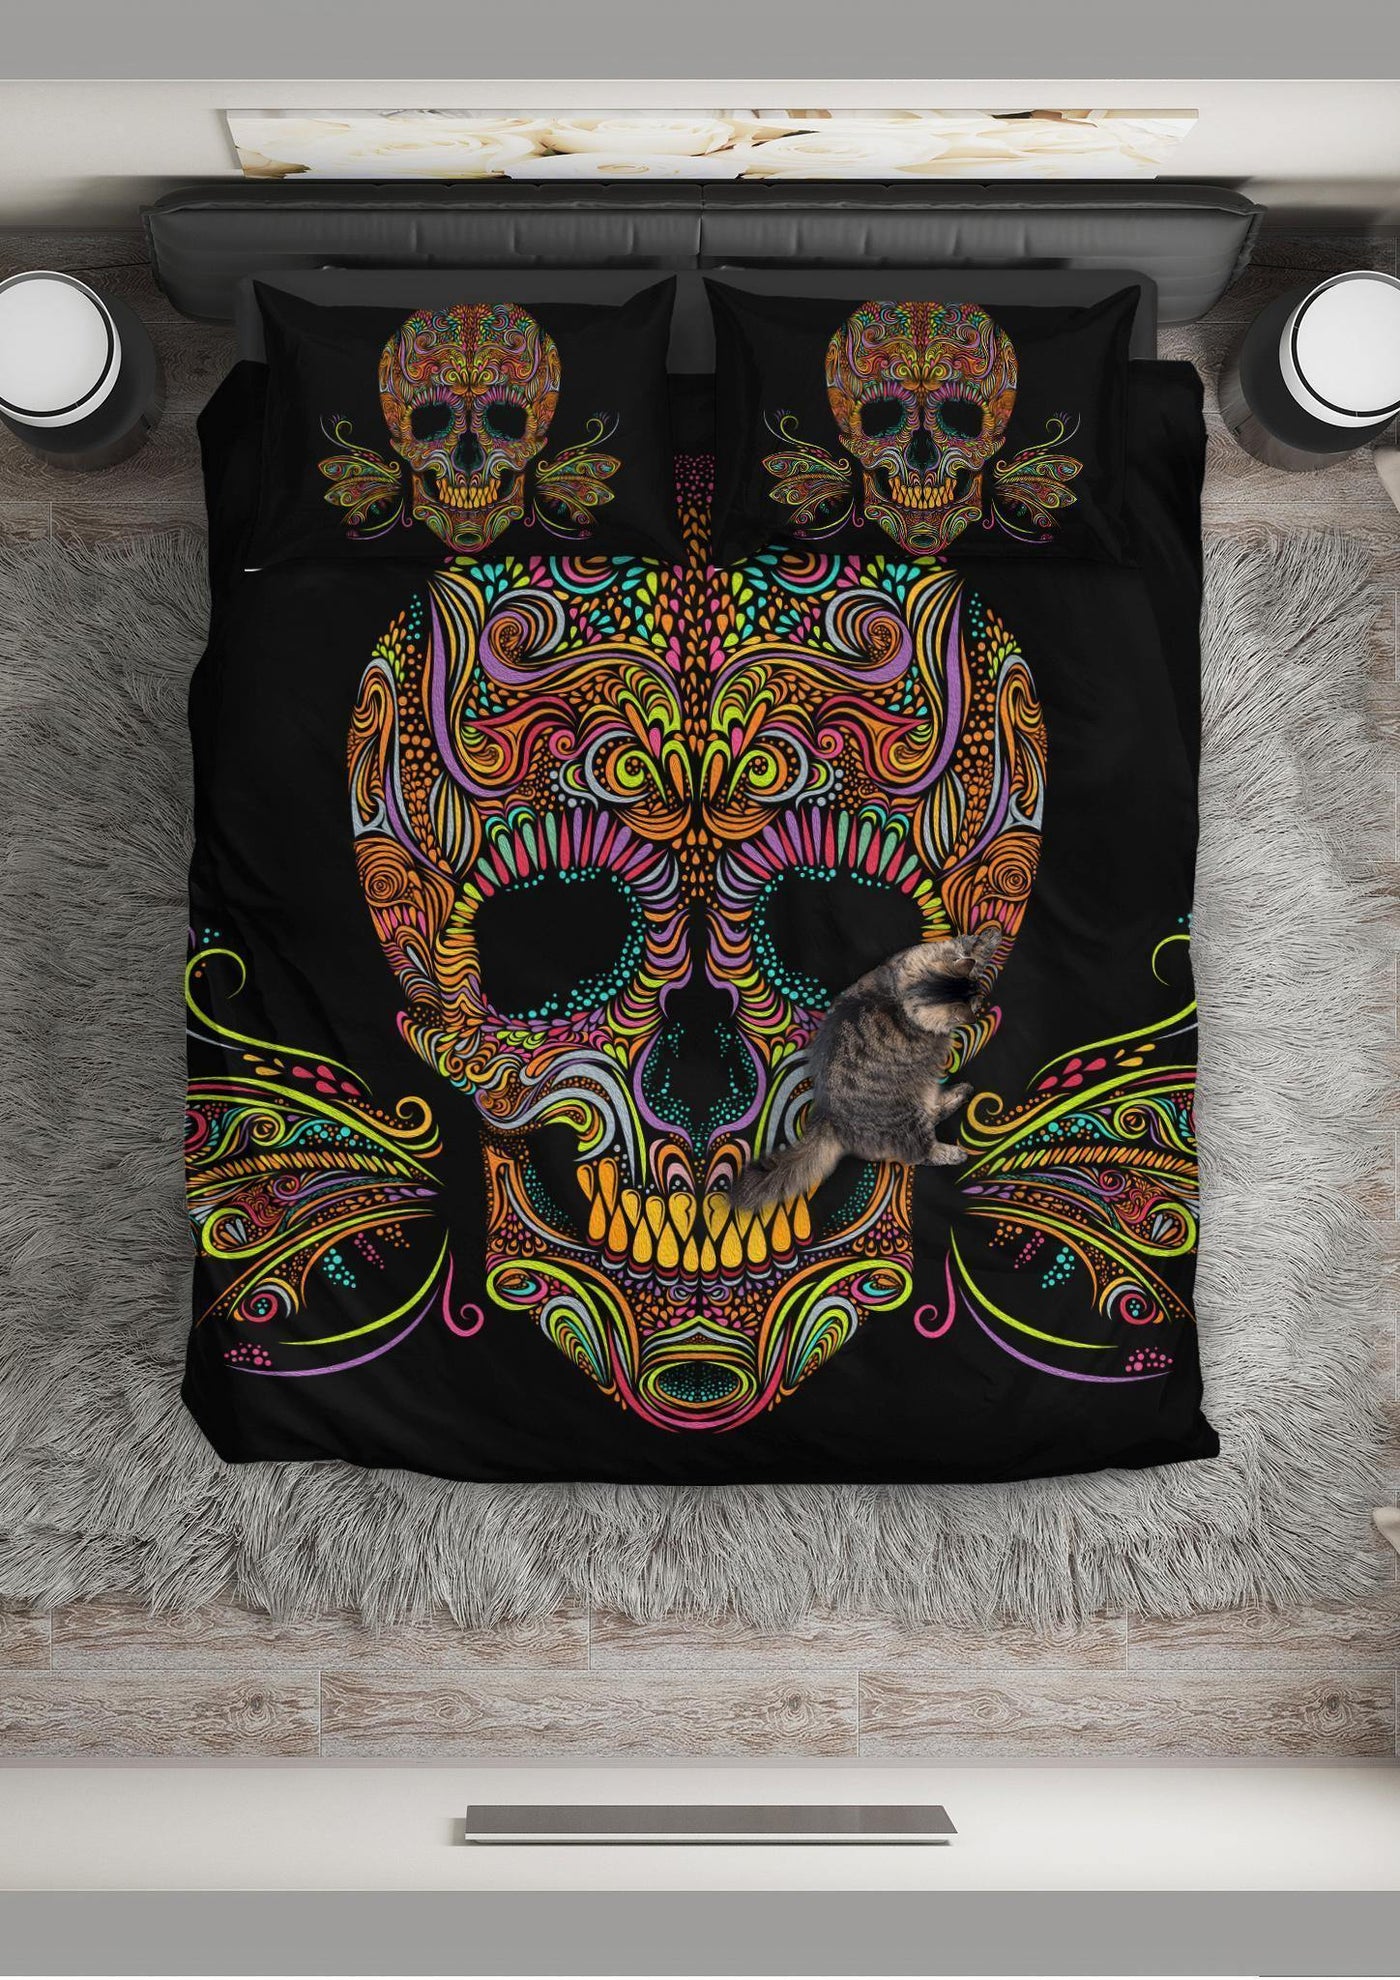 Skull Butterfly Bedding Set (1 Duvet Cover, 2 Pillowcases), Brushed Polyester Fabric, Black w/ Multicolored Skull Print - American Legend Rider